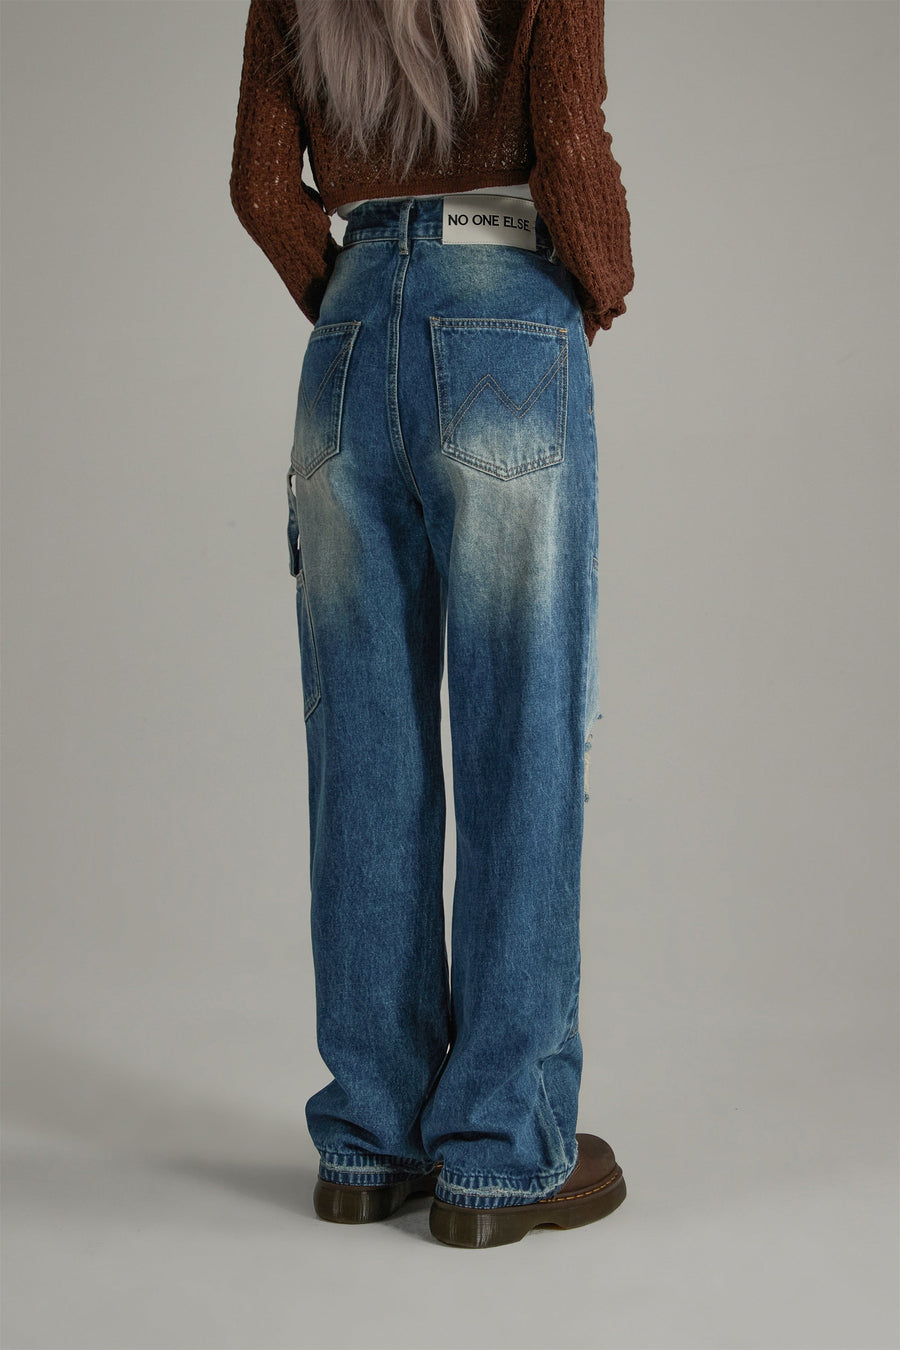 Wash Distressed Denim Jeans